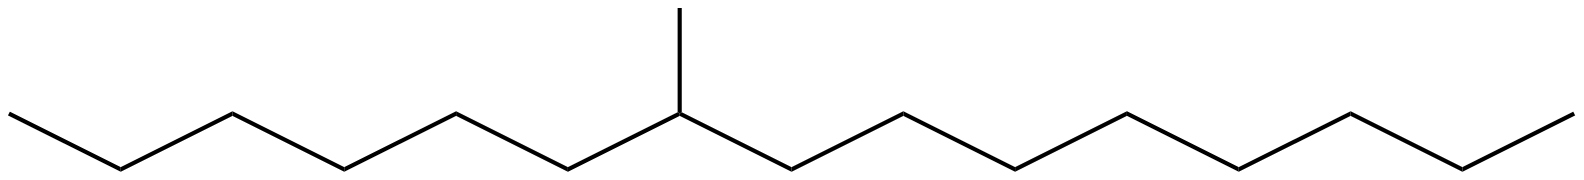 Image of 7-methylpentadecane